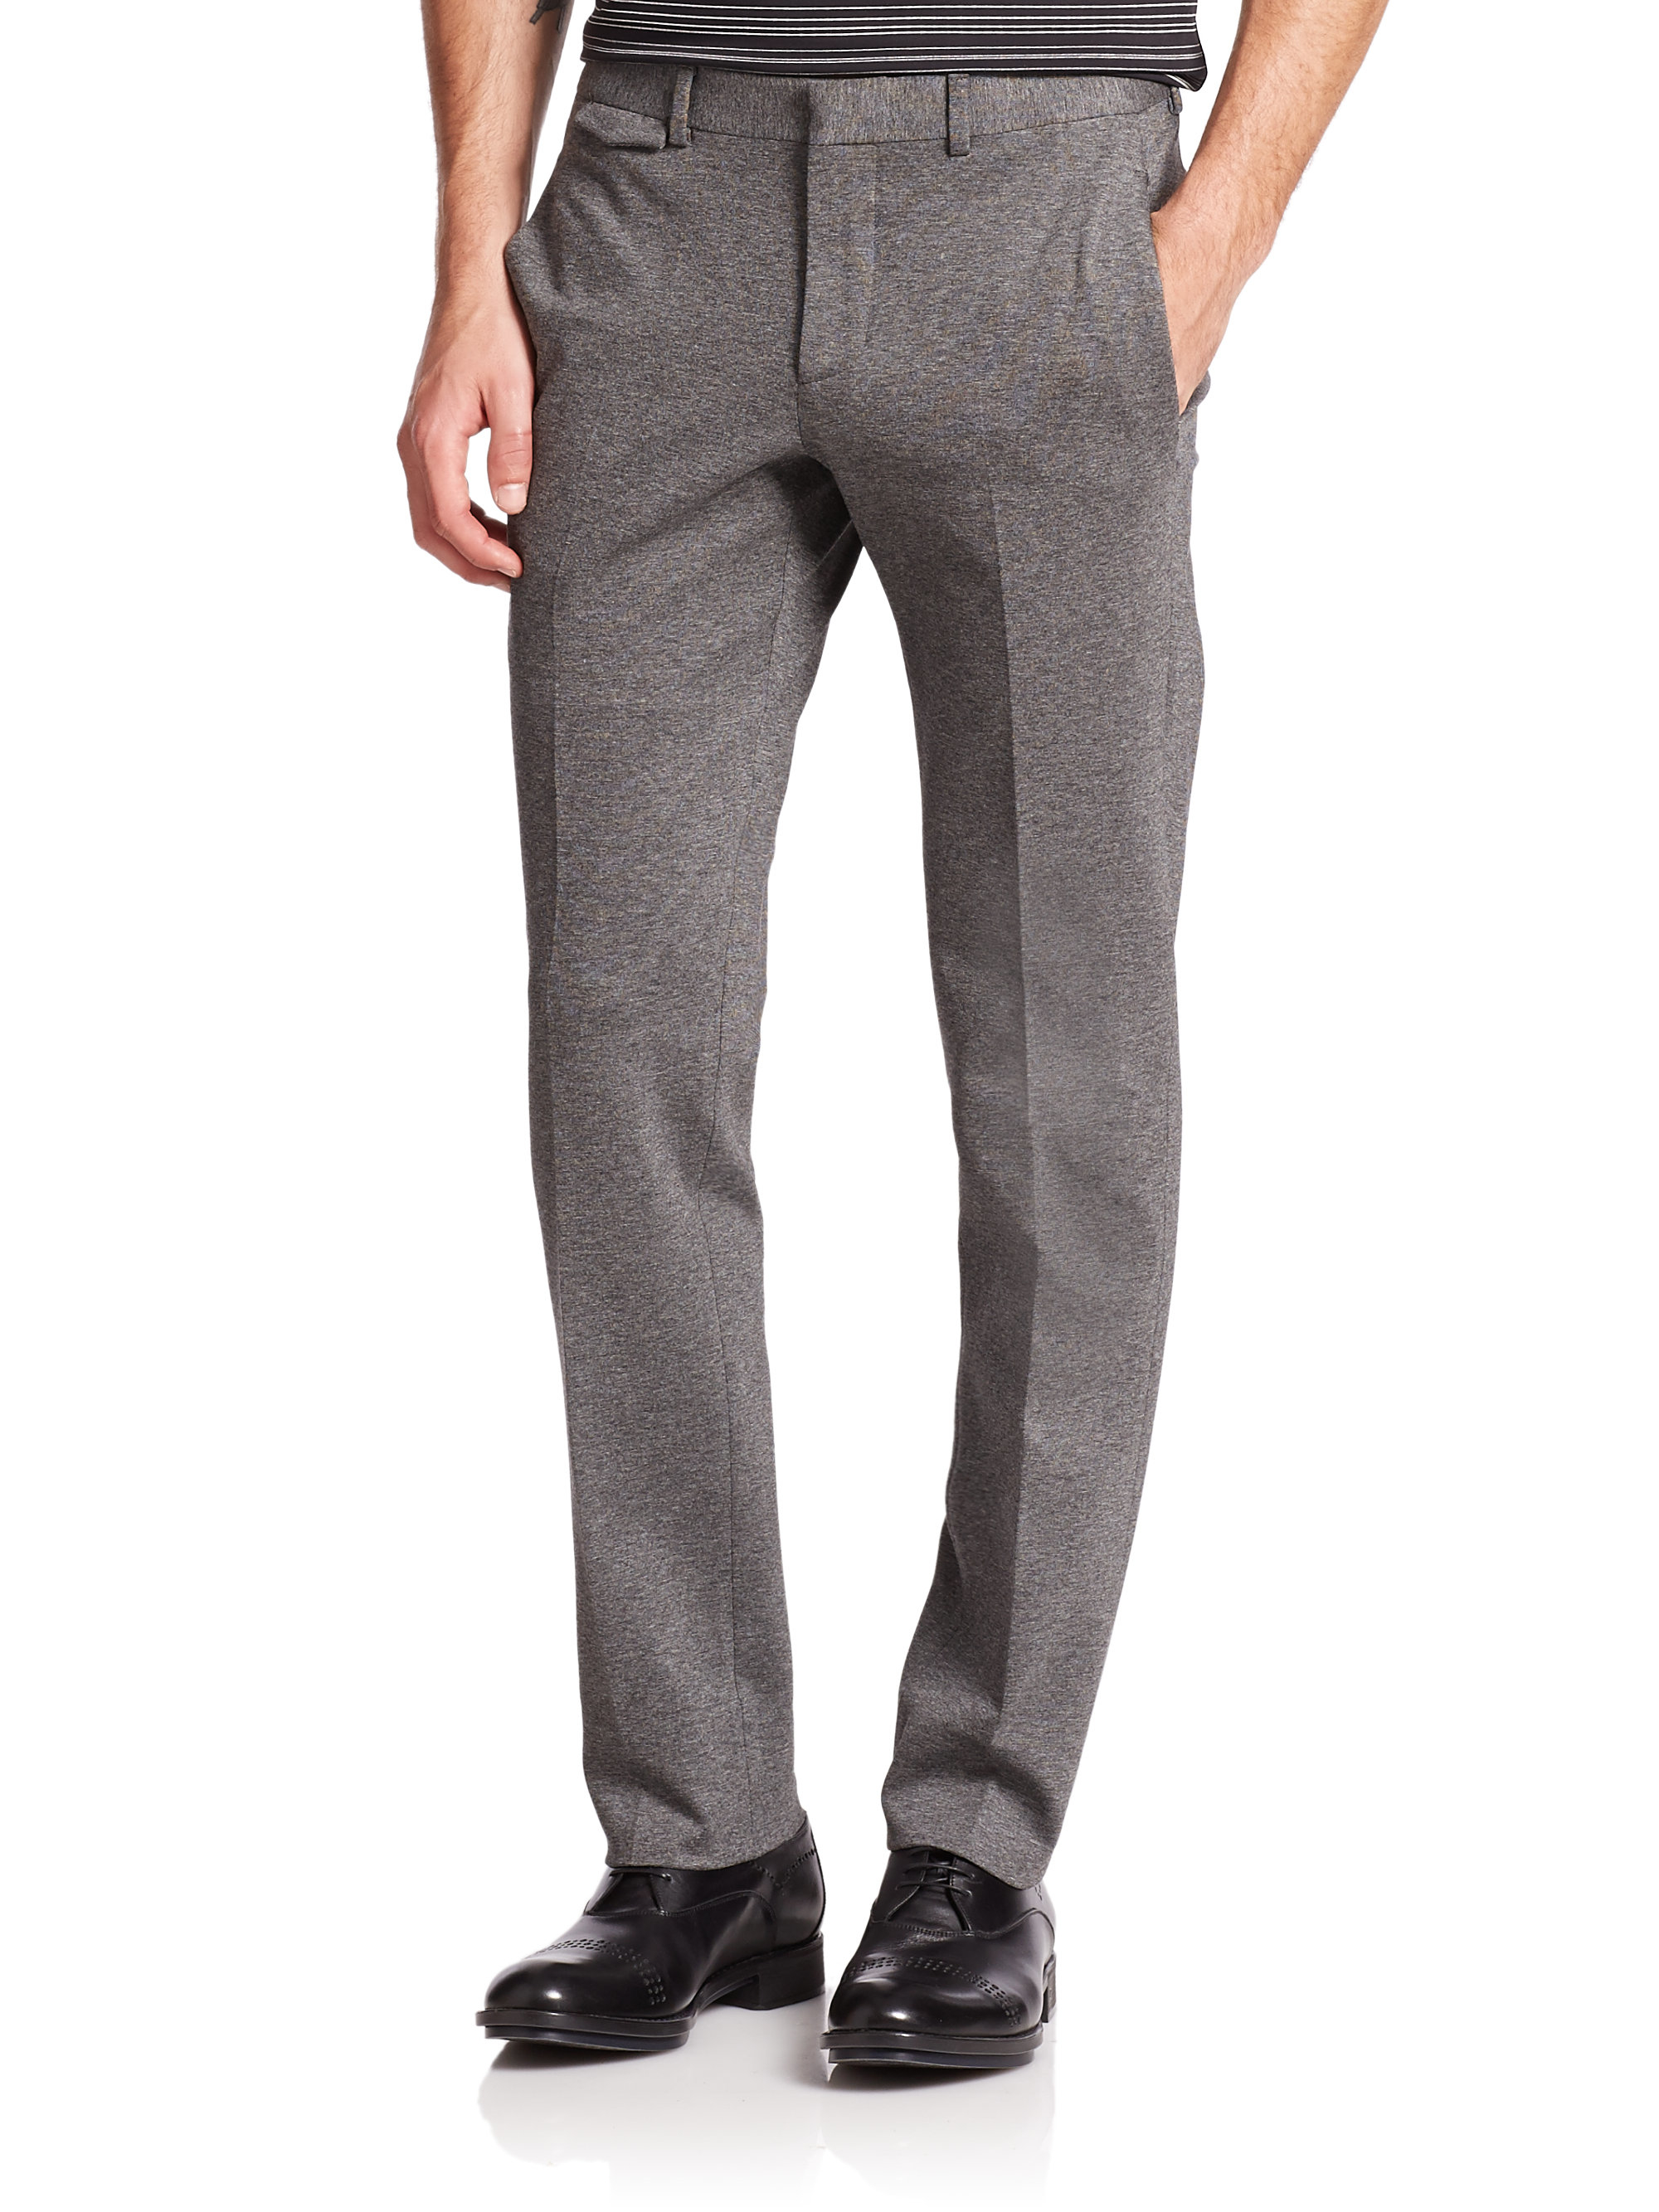 Lyst - Z Zegna Jersey Pants in Gray for Men